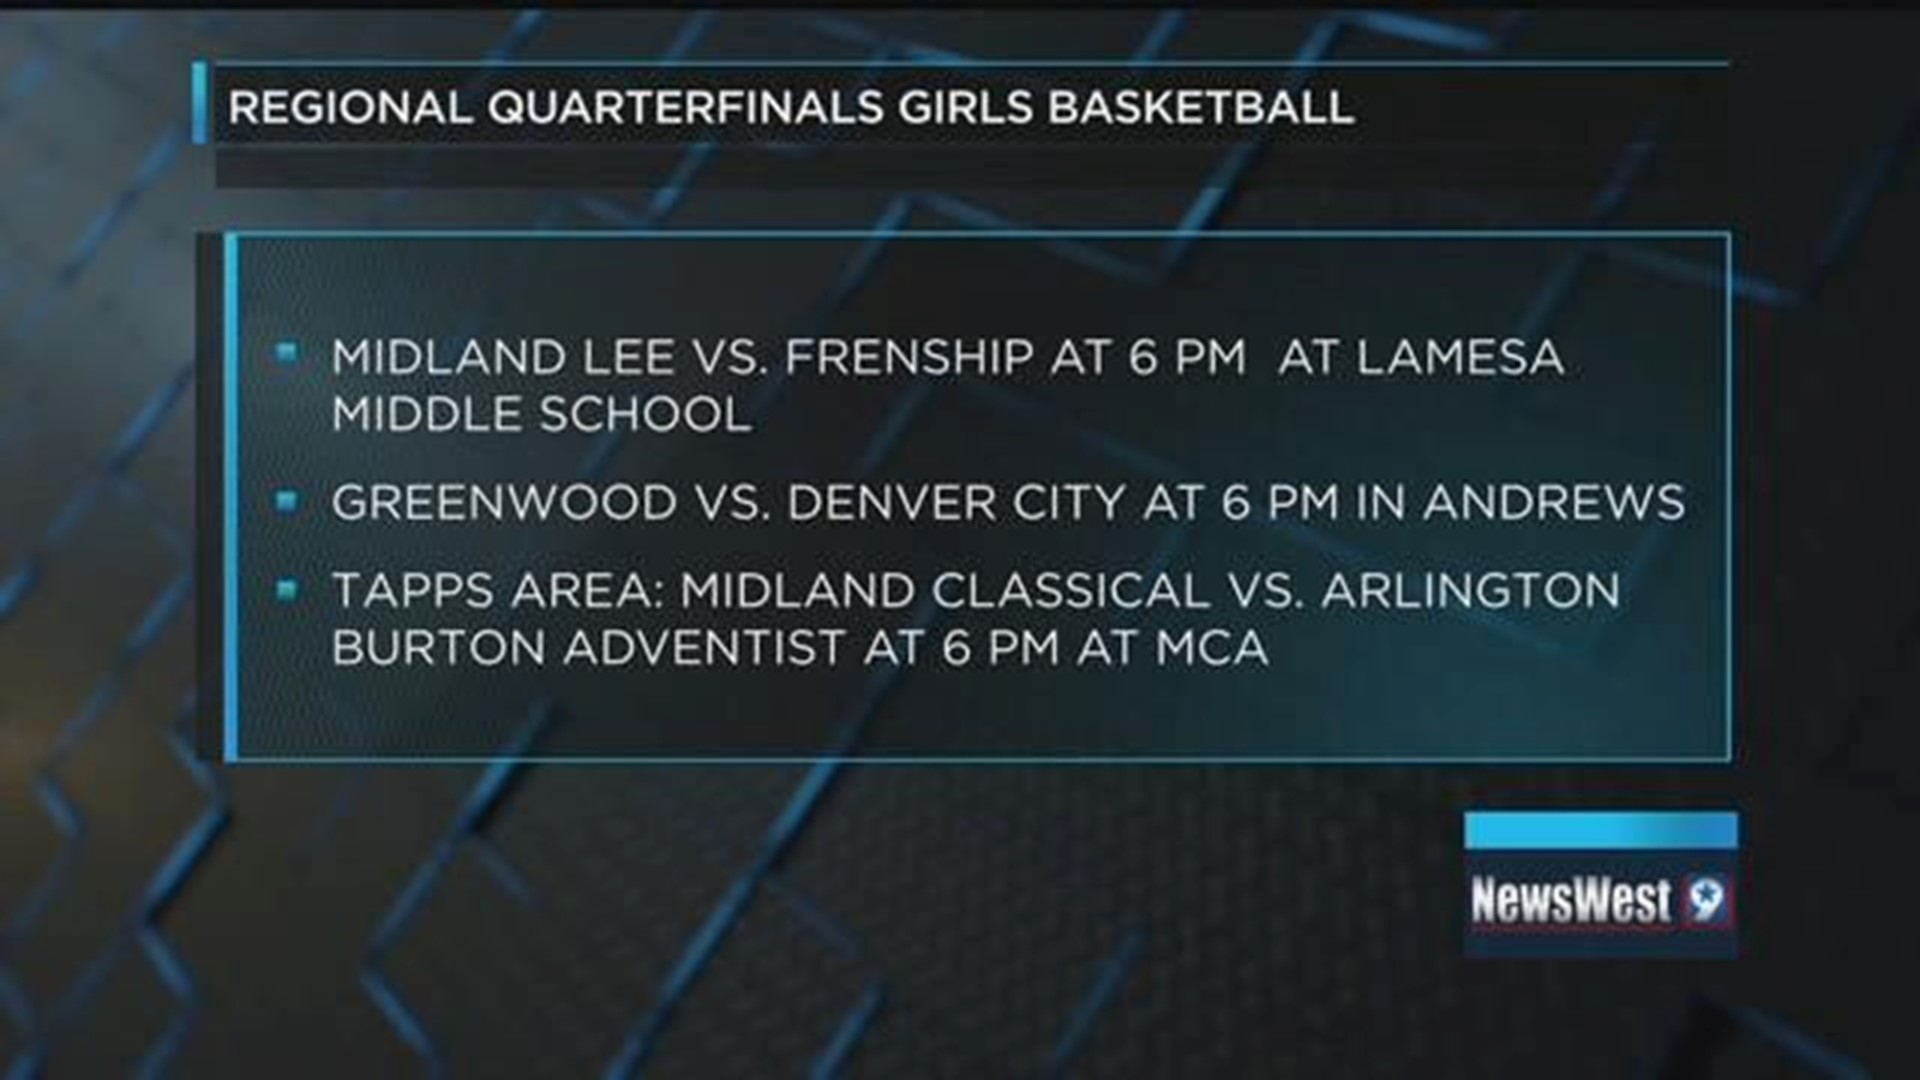 High School basketball playoff schedule for girls regional quarterfinals, boys bi-district